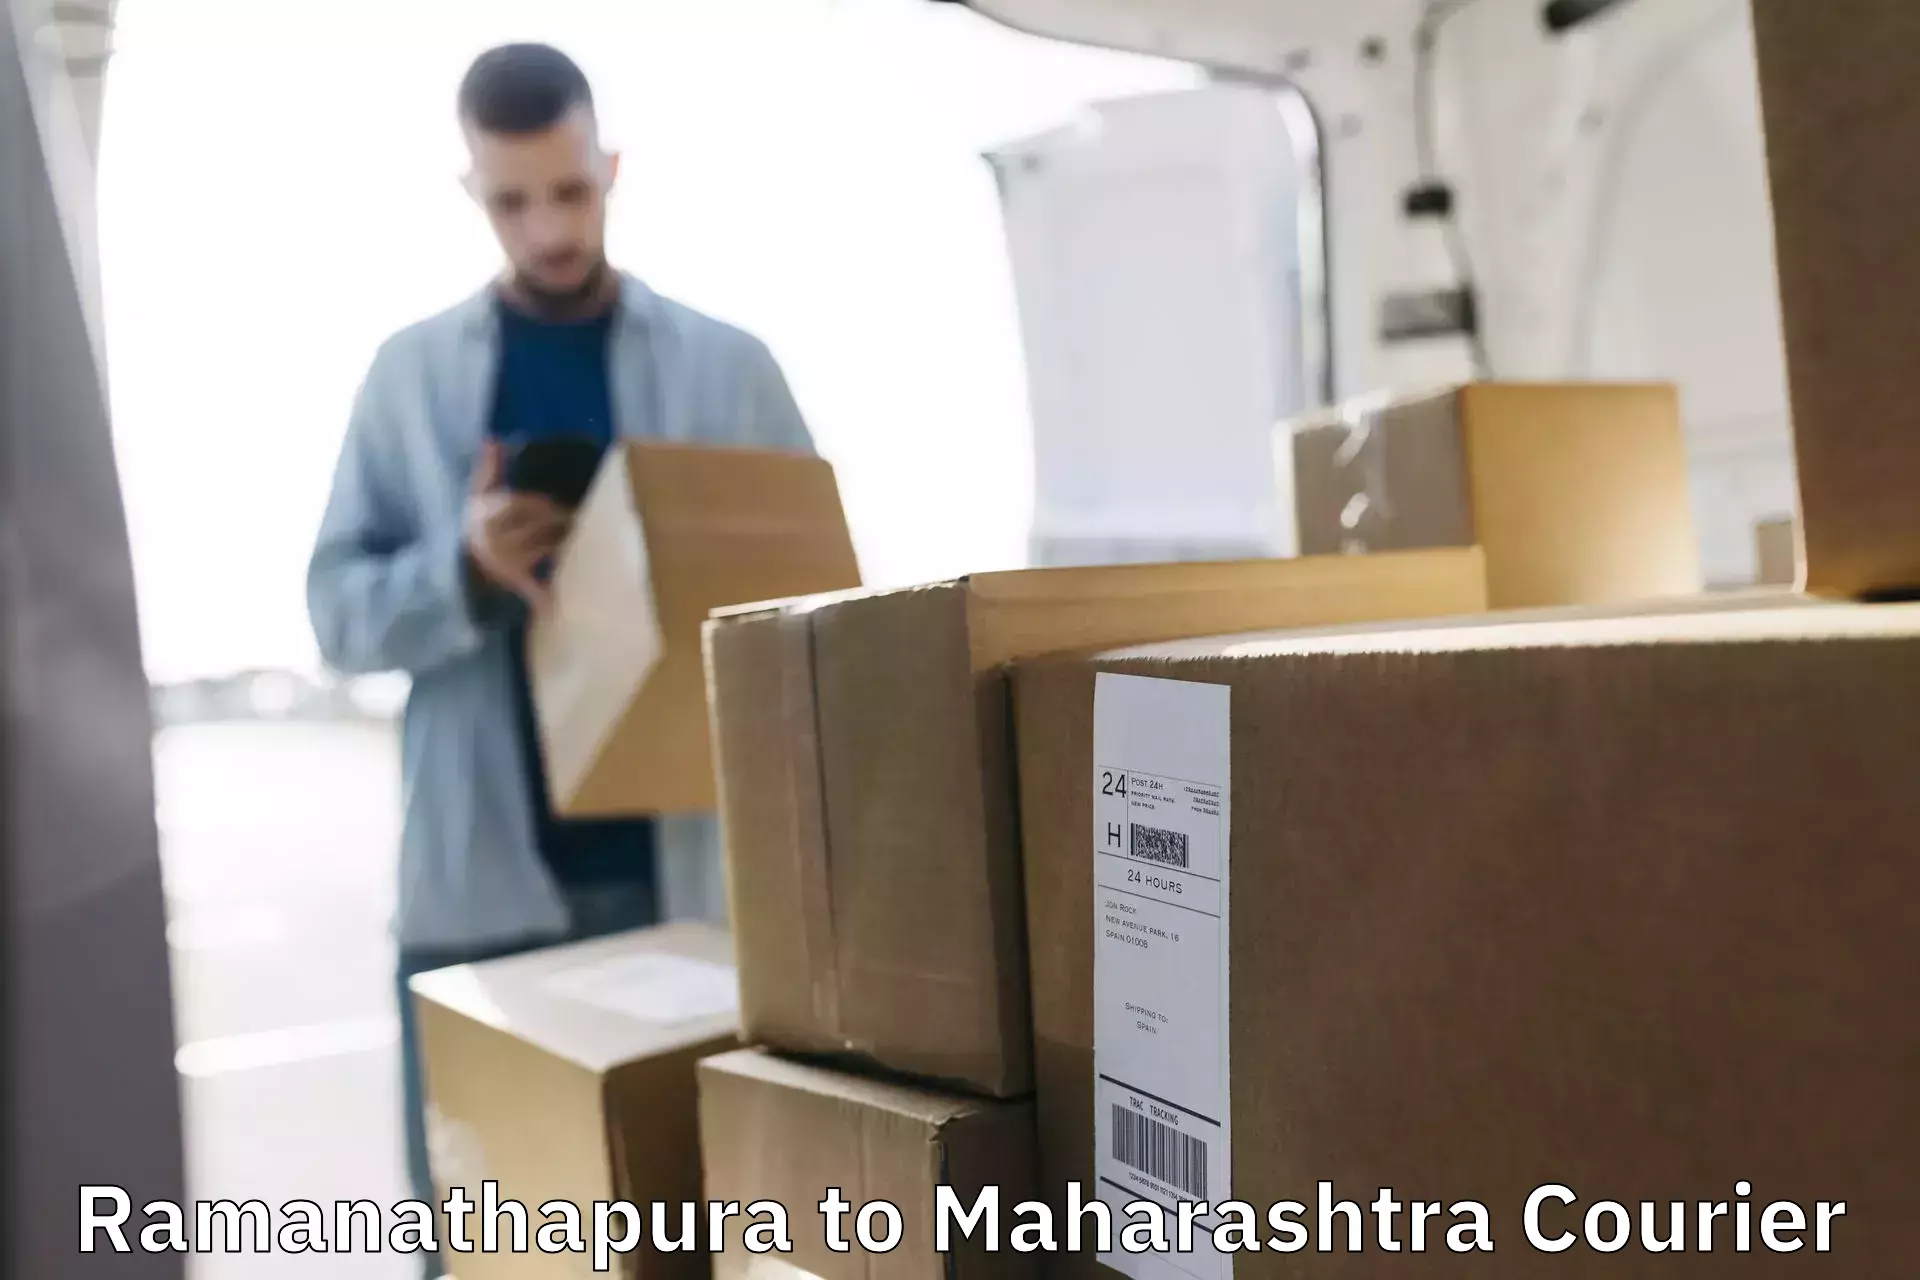 Express delivery capabilities Ramanathapura to Pimpri Chinchwad